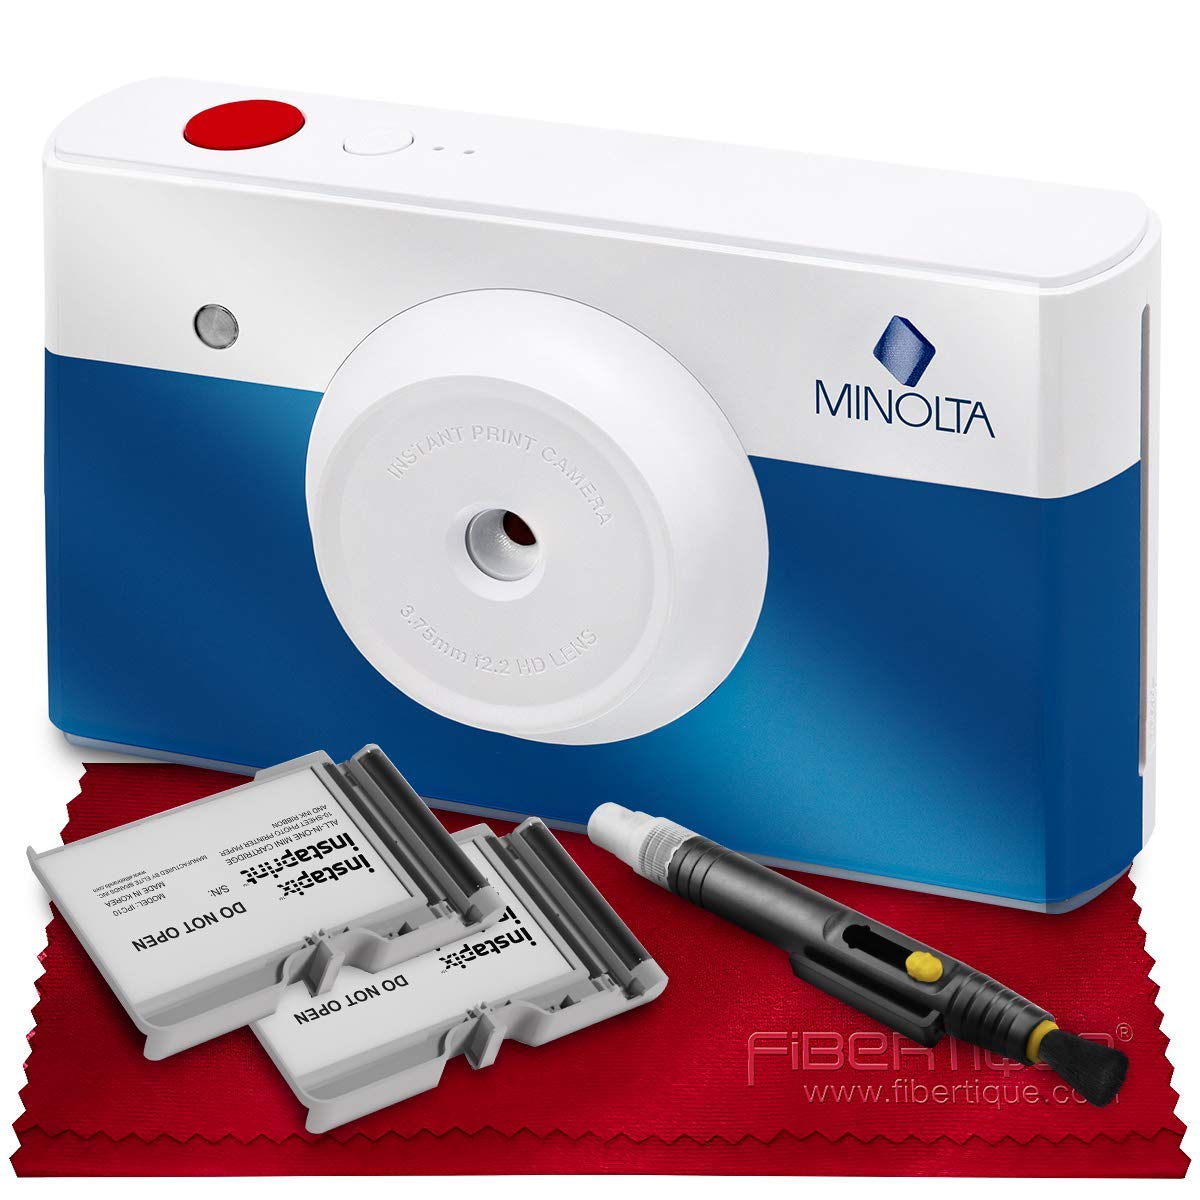 Picture of Minolta MINOLTA-MNCP10-BL-B-KIT3284-NFBA Instapix Print Digital Camera with Printer&#44; Blue